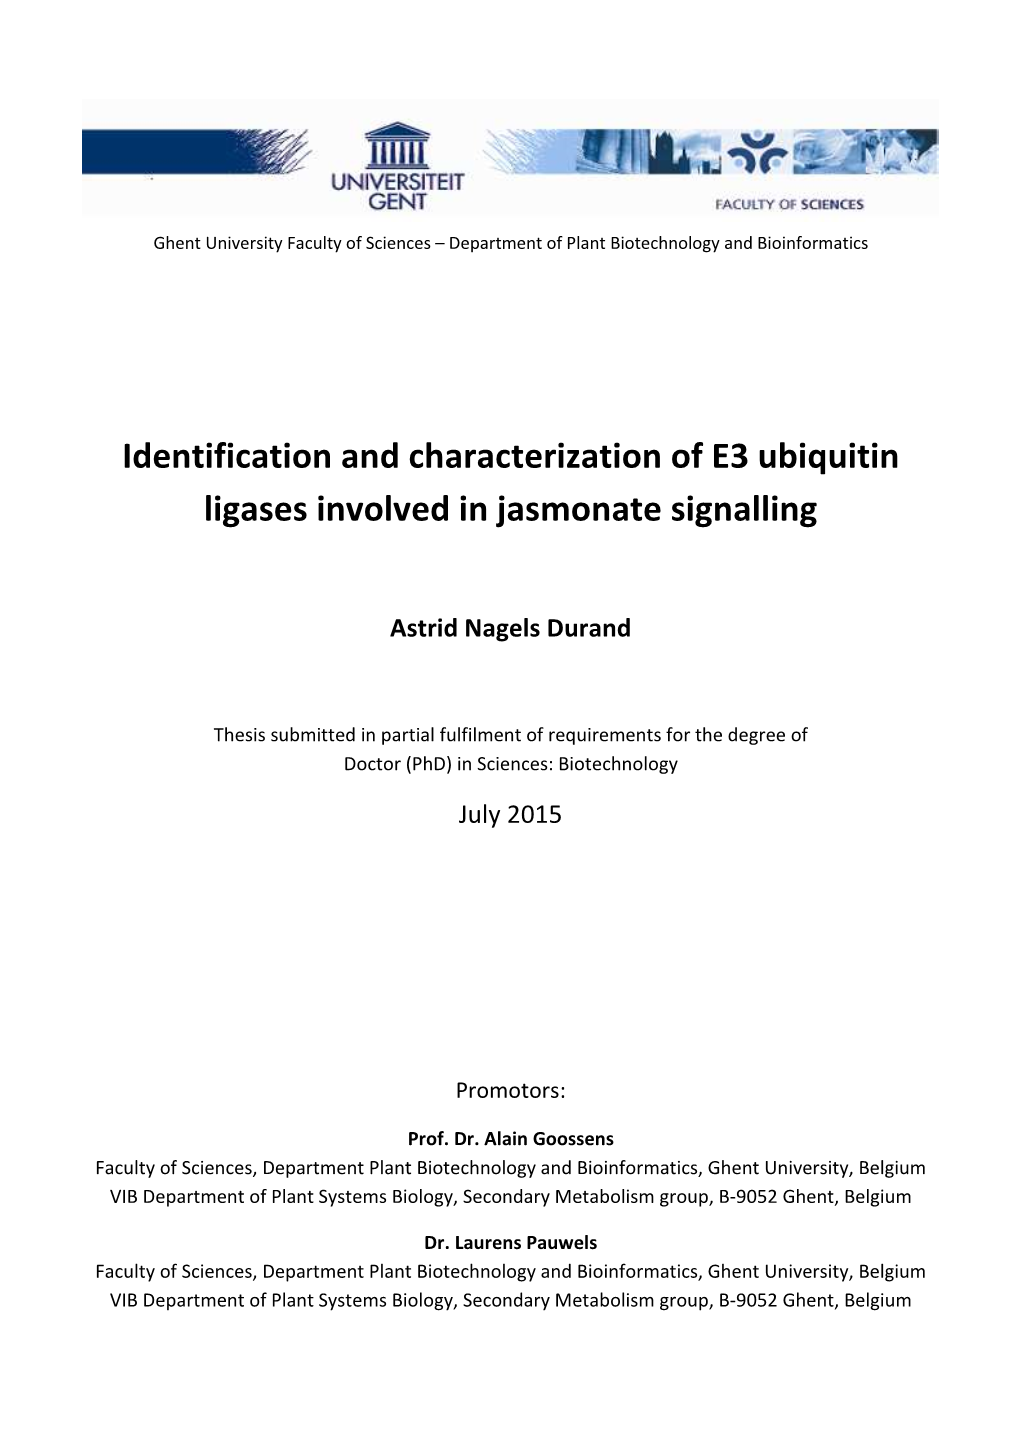 Identification and Characterization of E3 Ubiquitin Ligases Involved in Jasmonate Signalling